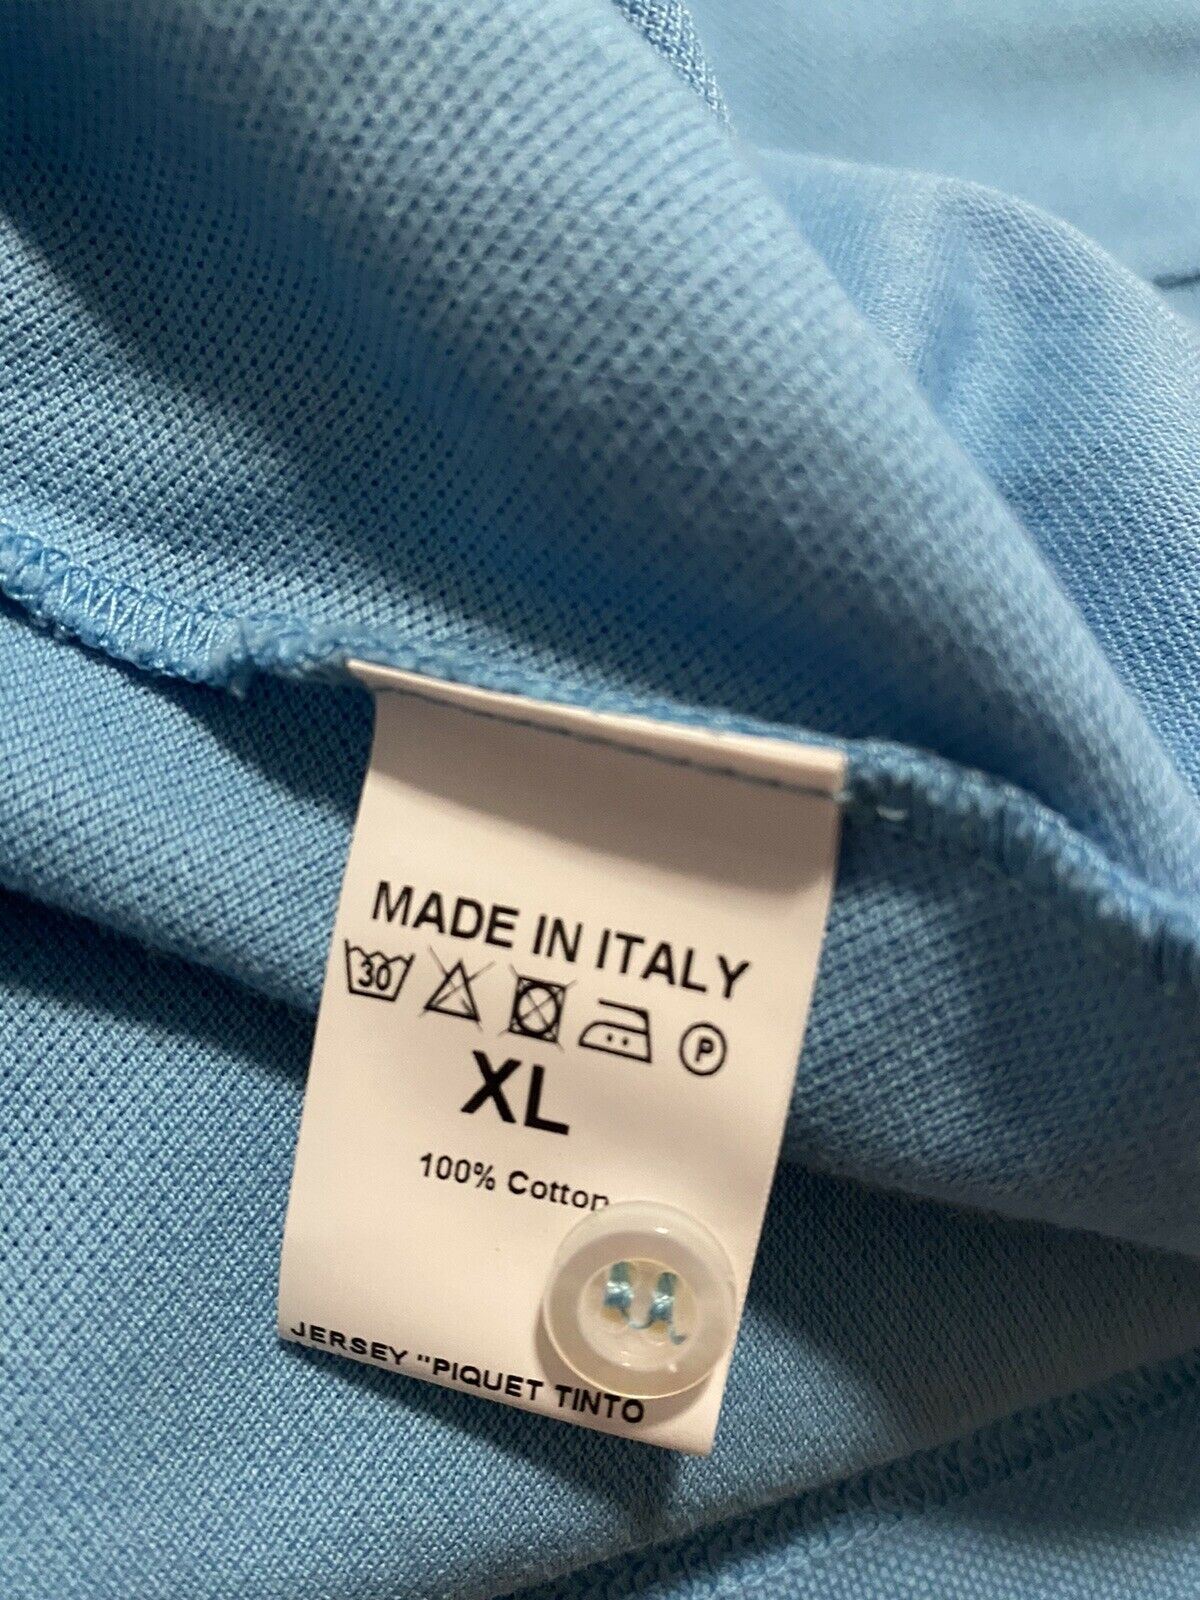 Neu mit Etikett: 475 $ Isaia Kurzarm-Poloshirt Farbe TÜRKIS Größe XL Italien